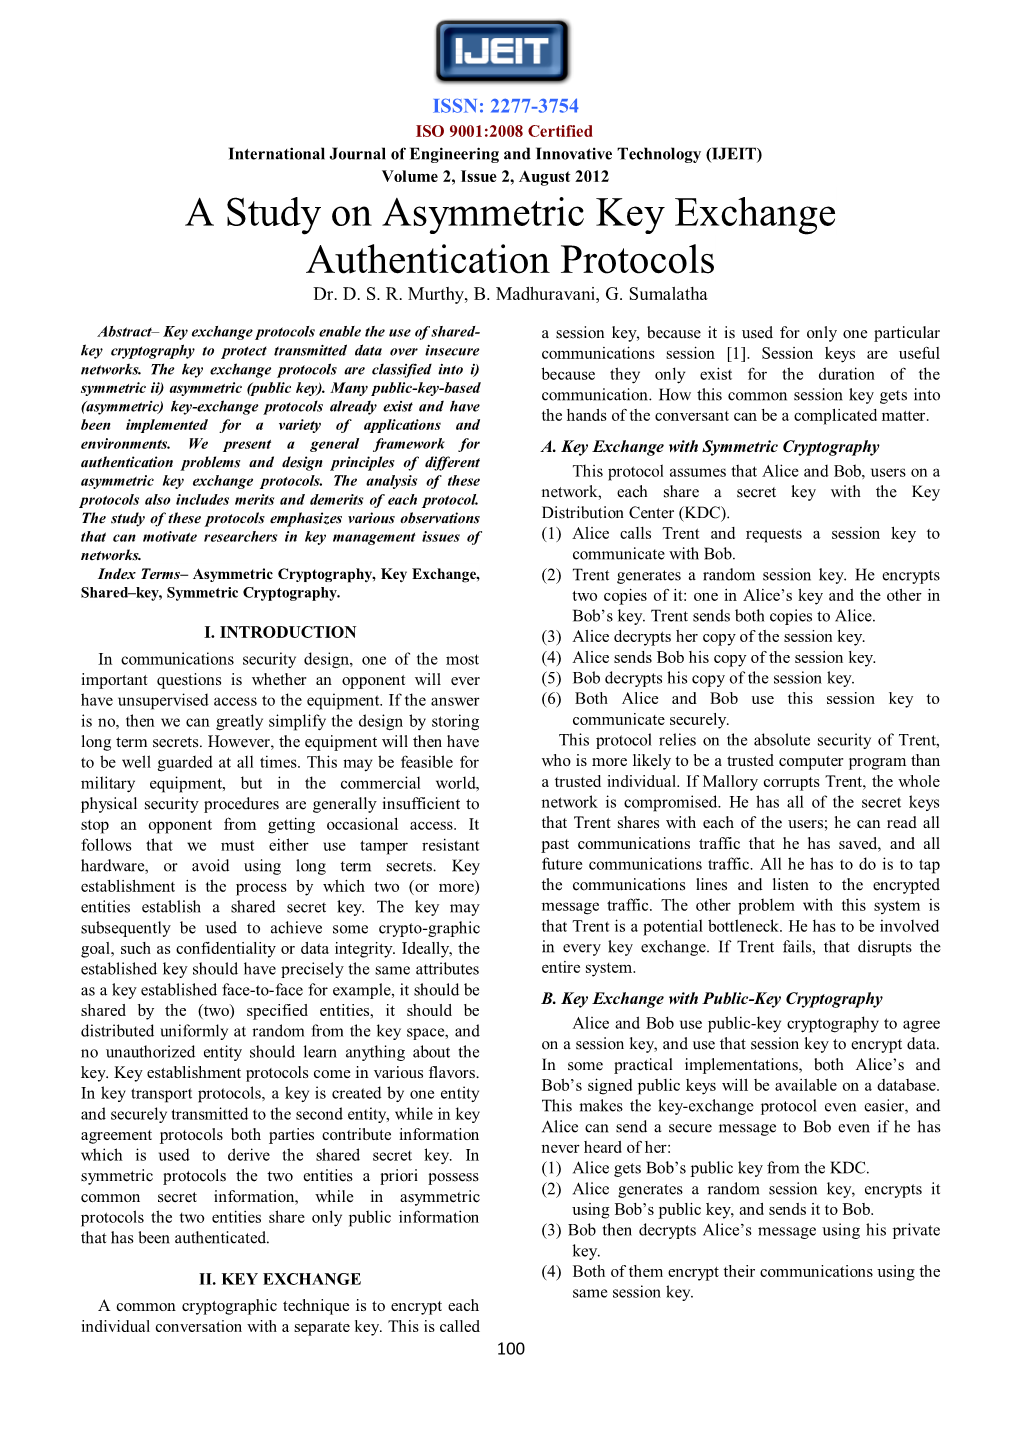 A Study on Asymmetric Key Exchange Authentication Protocols Dr